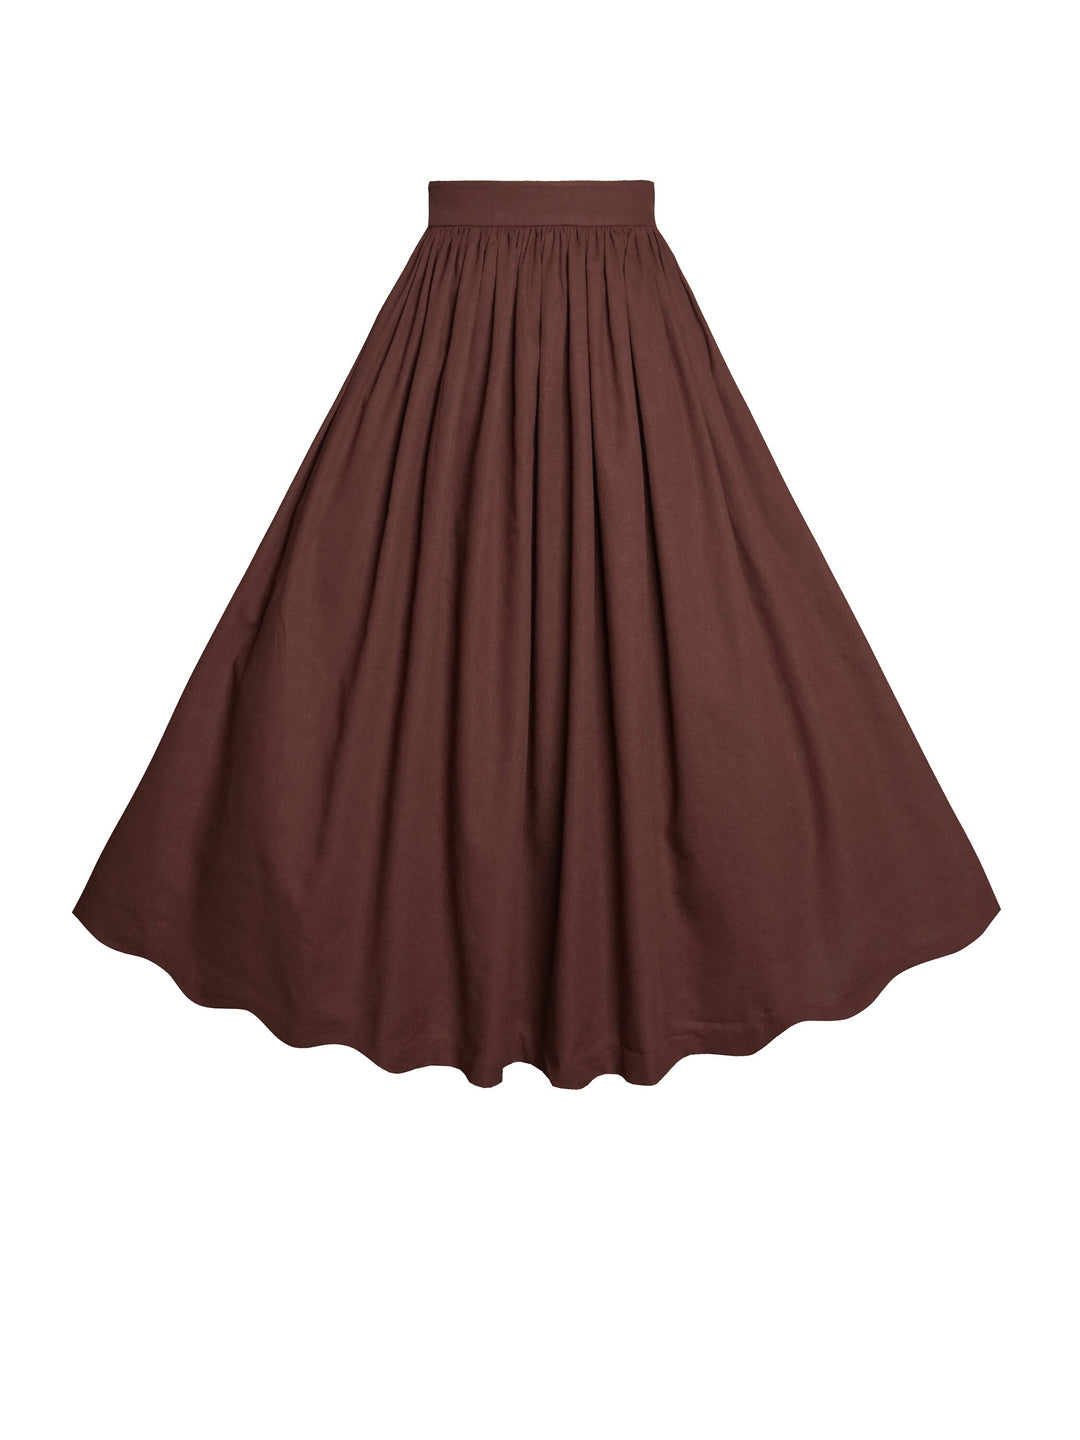 MTO - Lola Skirt in Walnut Linen